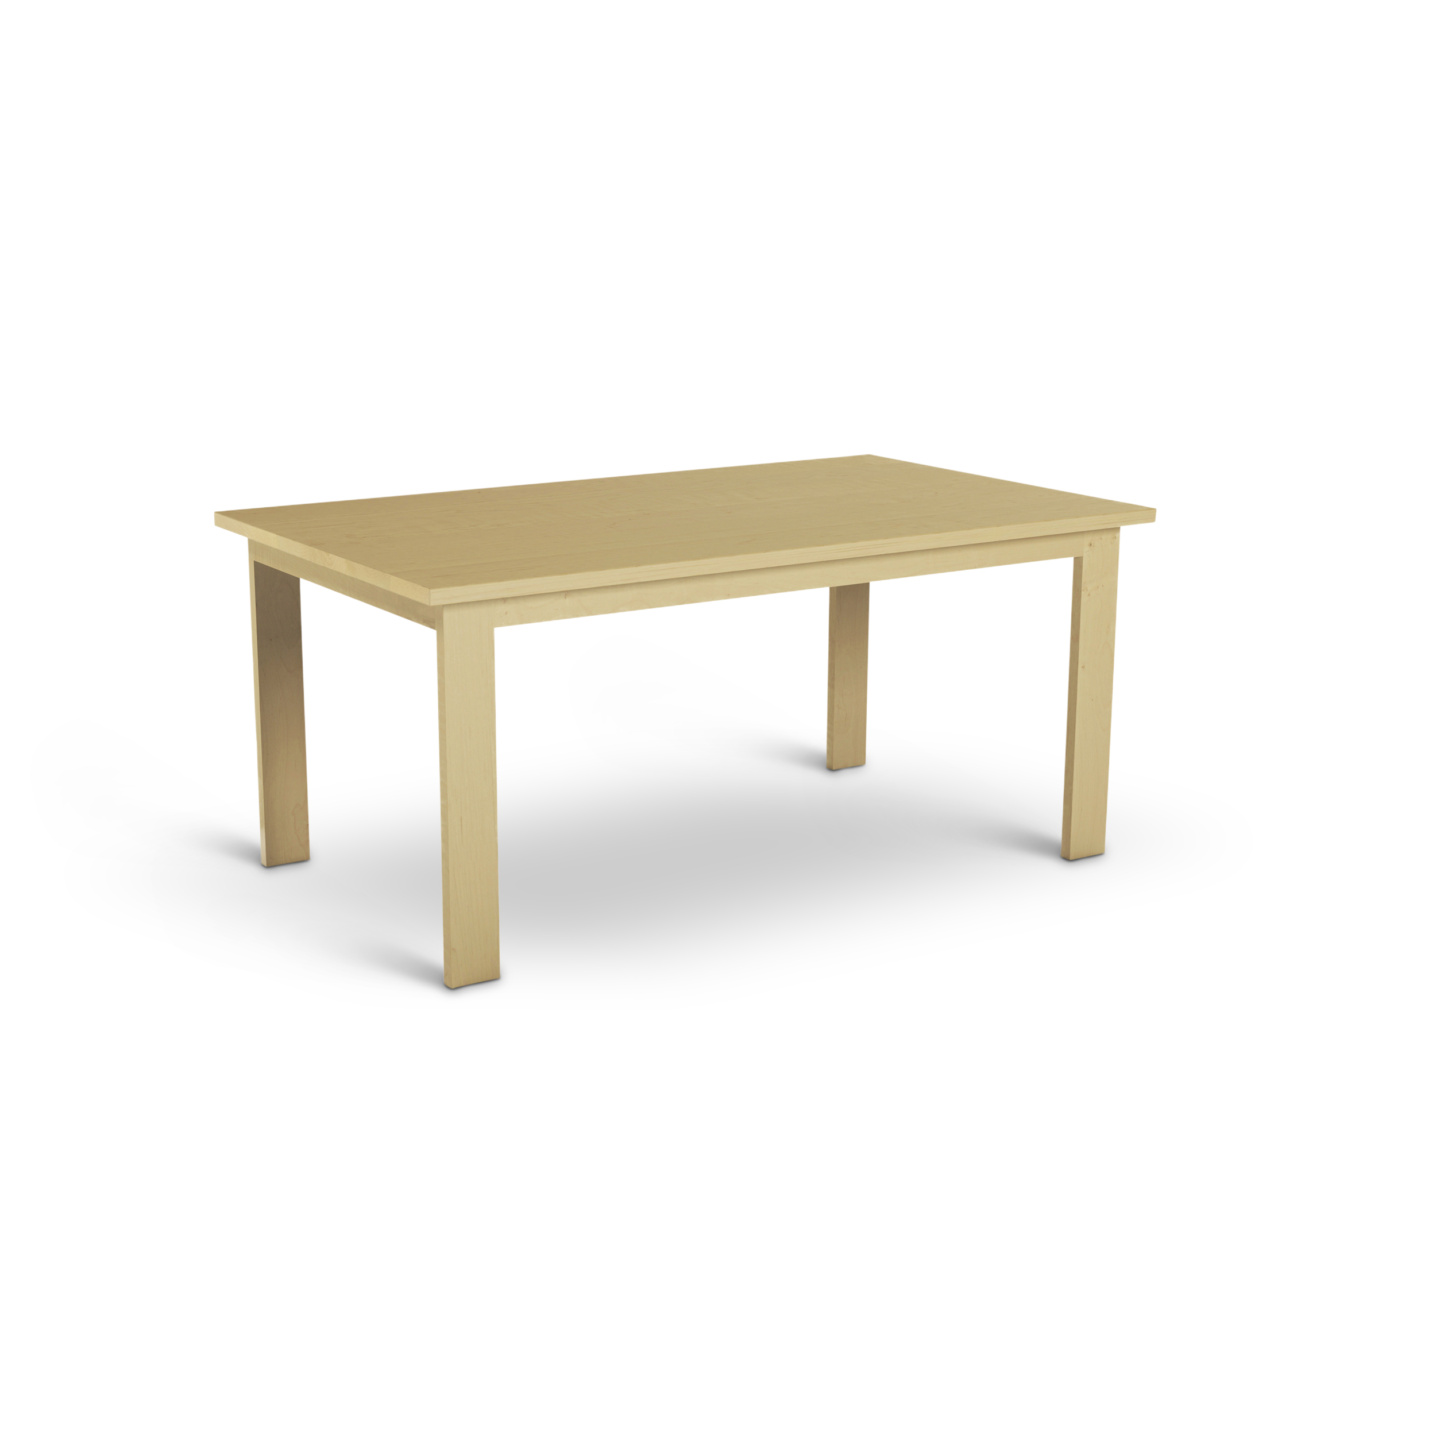 66" Maple Modern Table